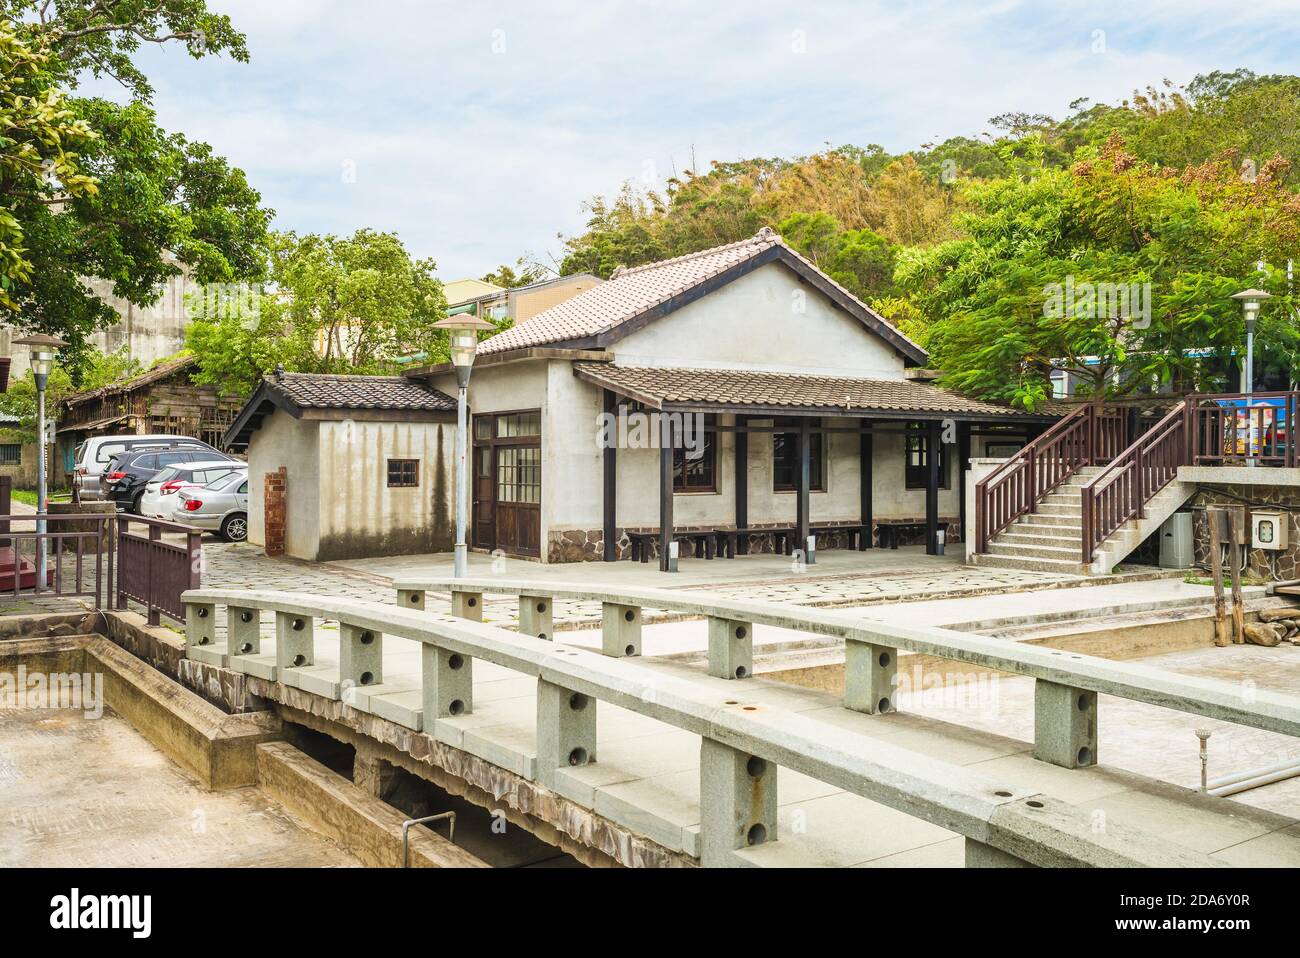 Old railway dormitory in zaoqiao township, taiwan Stock Photo